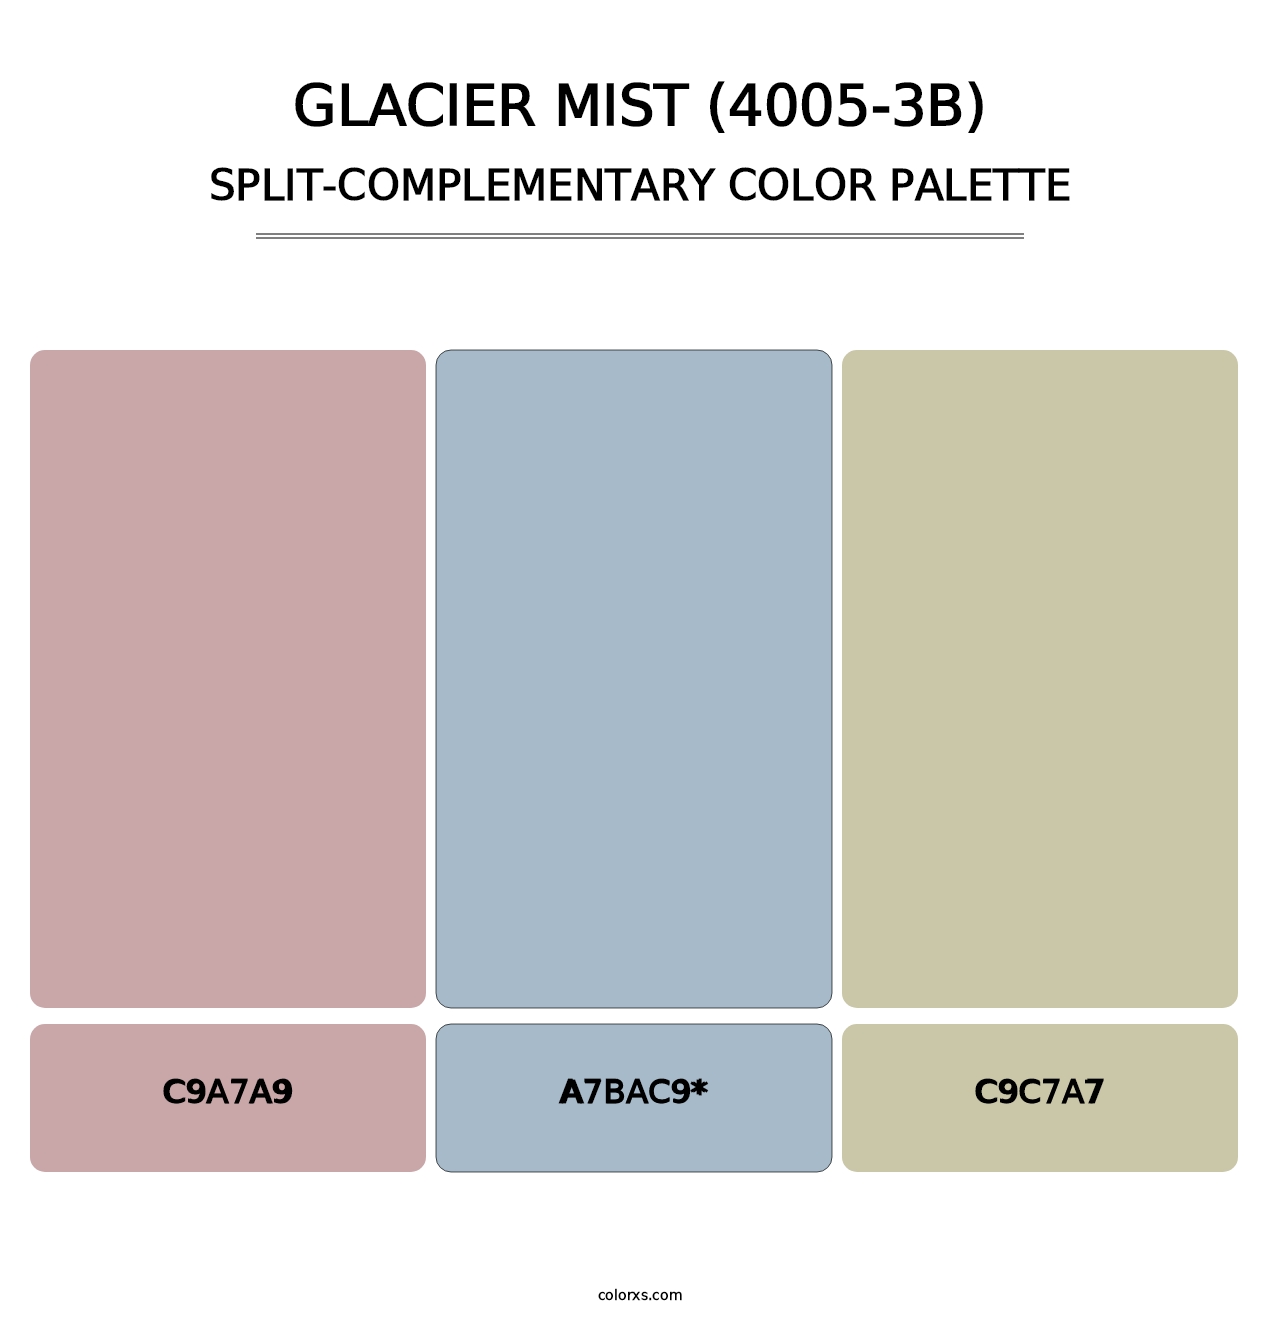 Glacier Mist (4005-3B) - Split-Complementary Color Palette